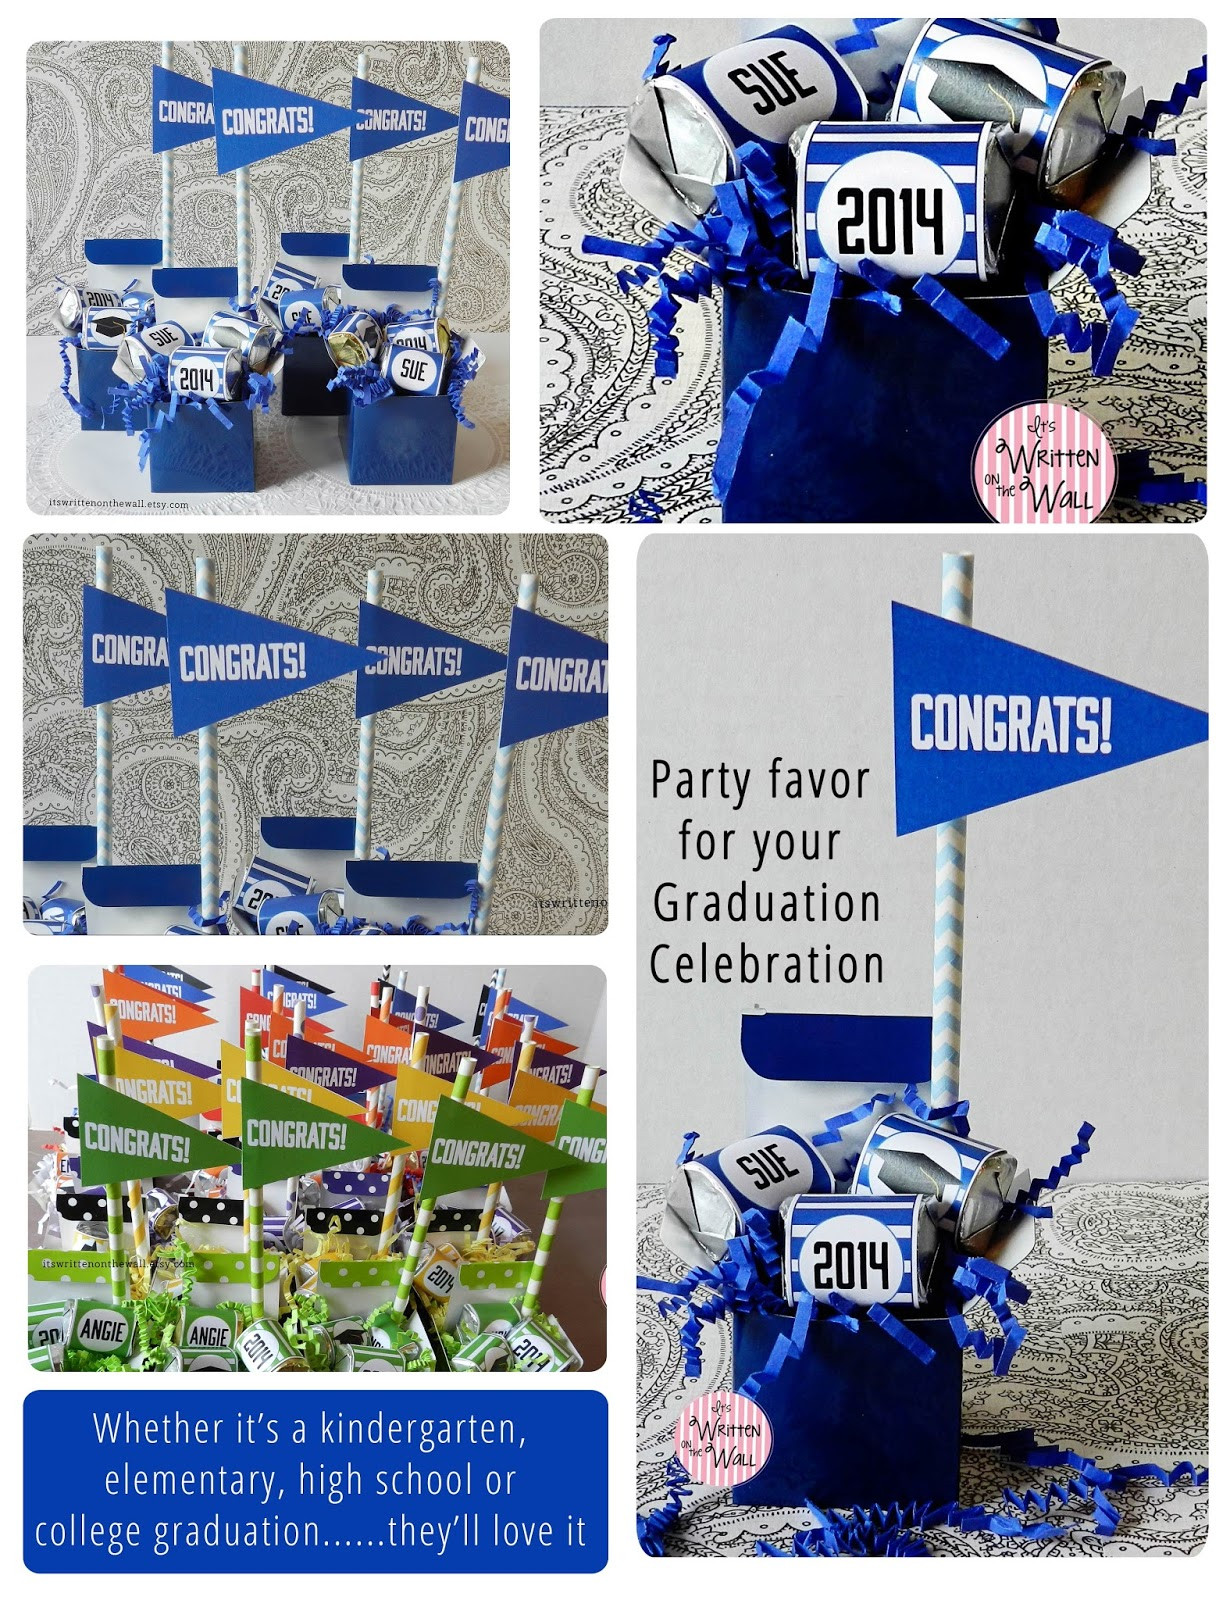 College Graduation Party Favor Ideas
 Ideas for Graduation Parties Personalized Party Favors